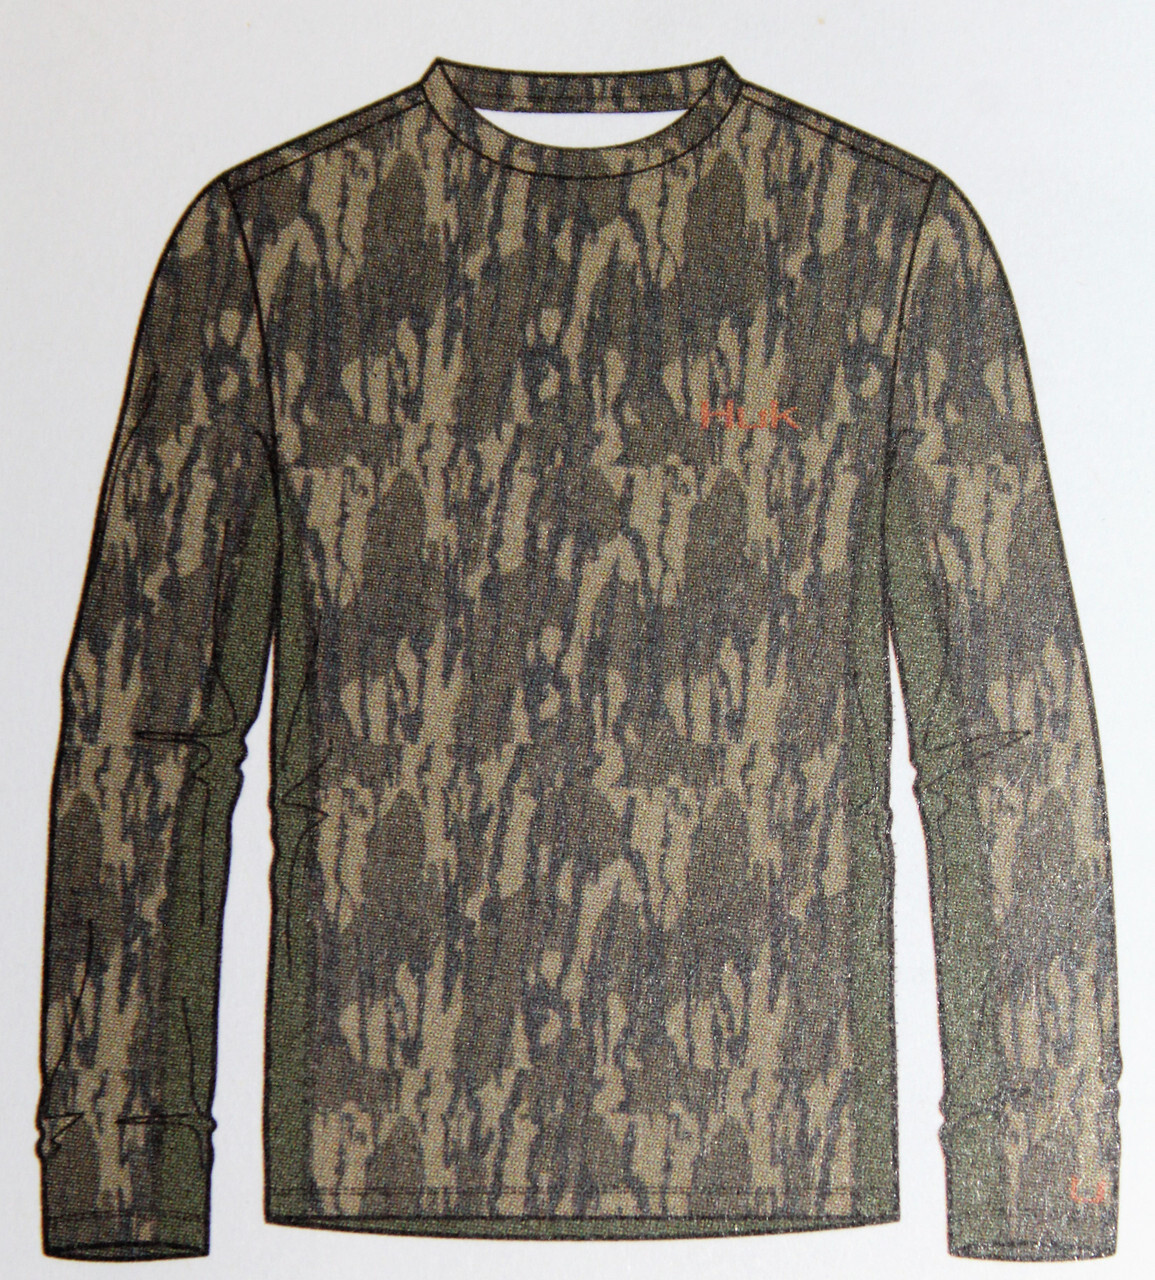 Huk Pursuit LS Shirt, Color: Mossy Oak Bottomland, Size: M